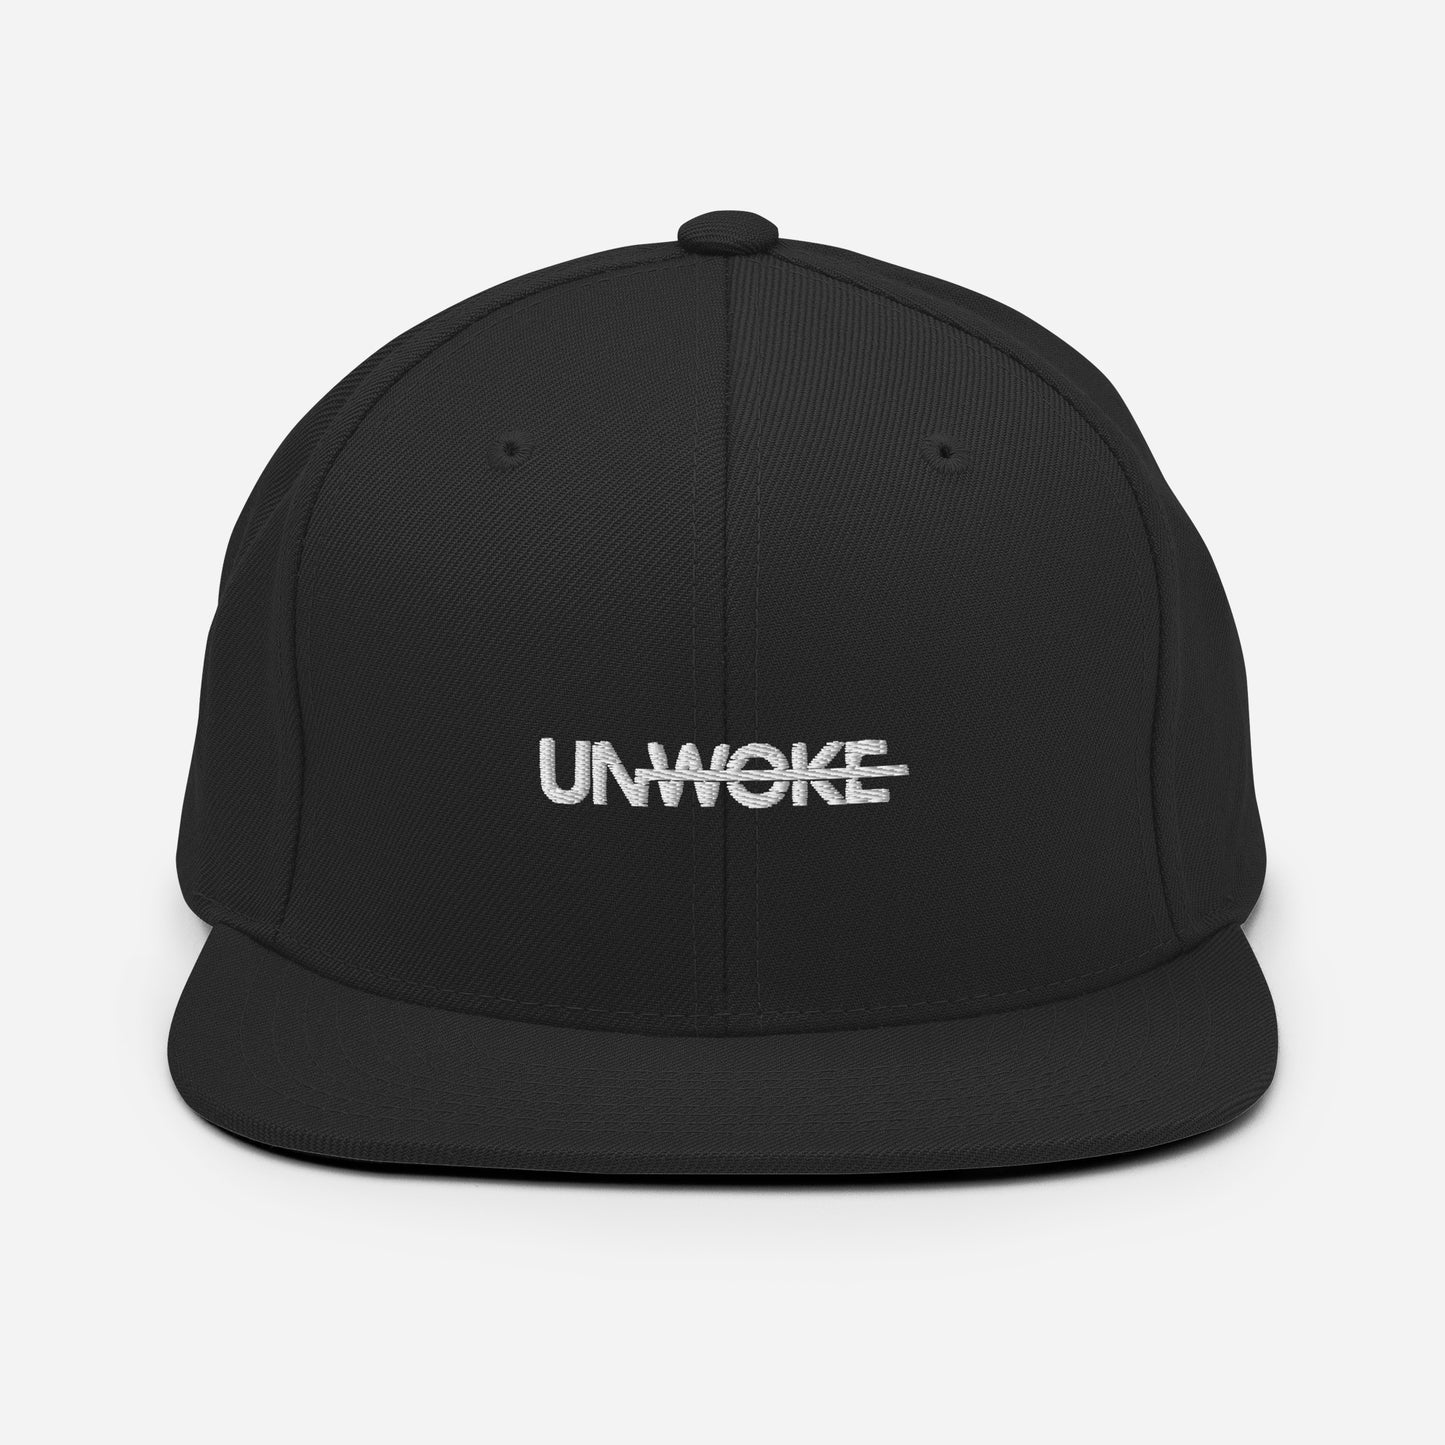 Unwoke Minimulist Hat Snapback Hat